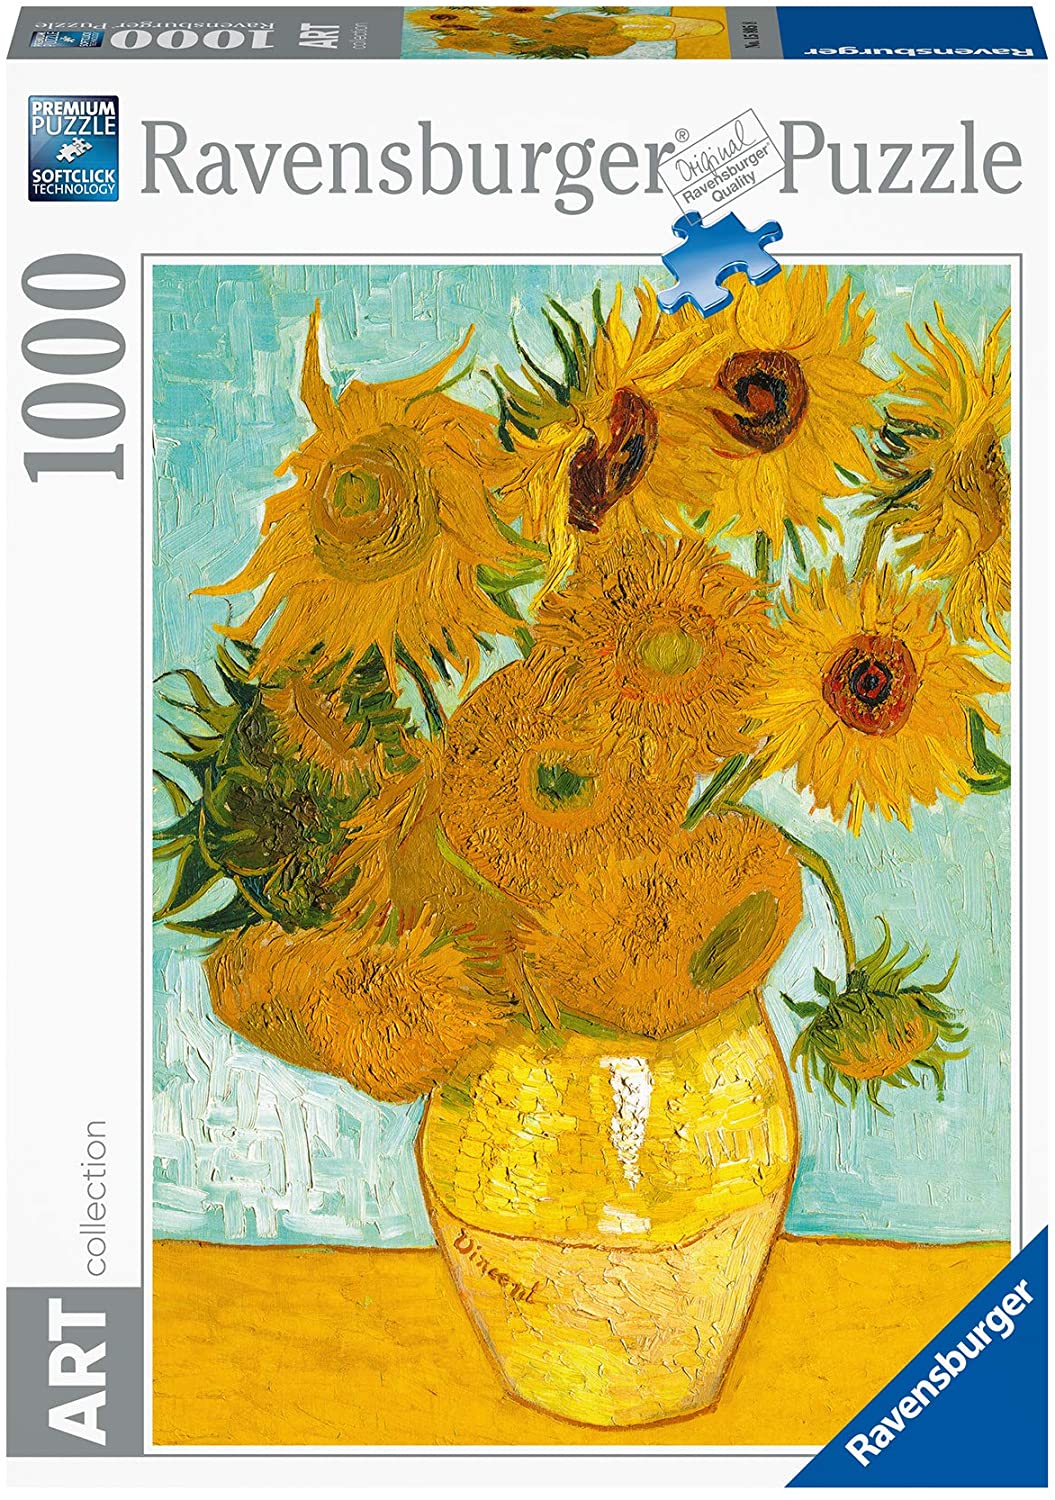 https://www.thepuzzlecollections.com/wp-content/uploads/2021/10/ravensburger-Van-Gogh-Vase-of-Flower-Puzzle.jpg